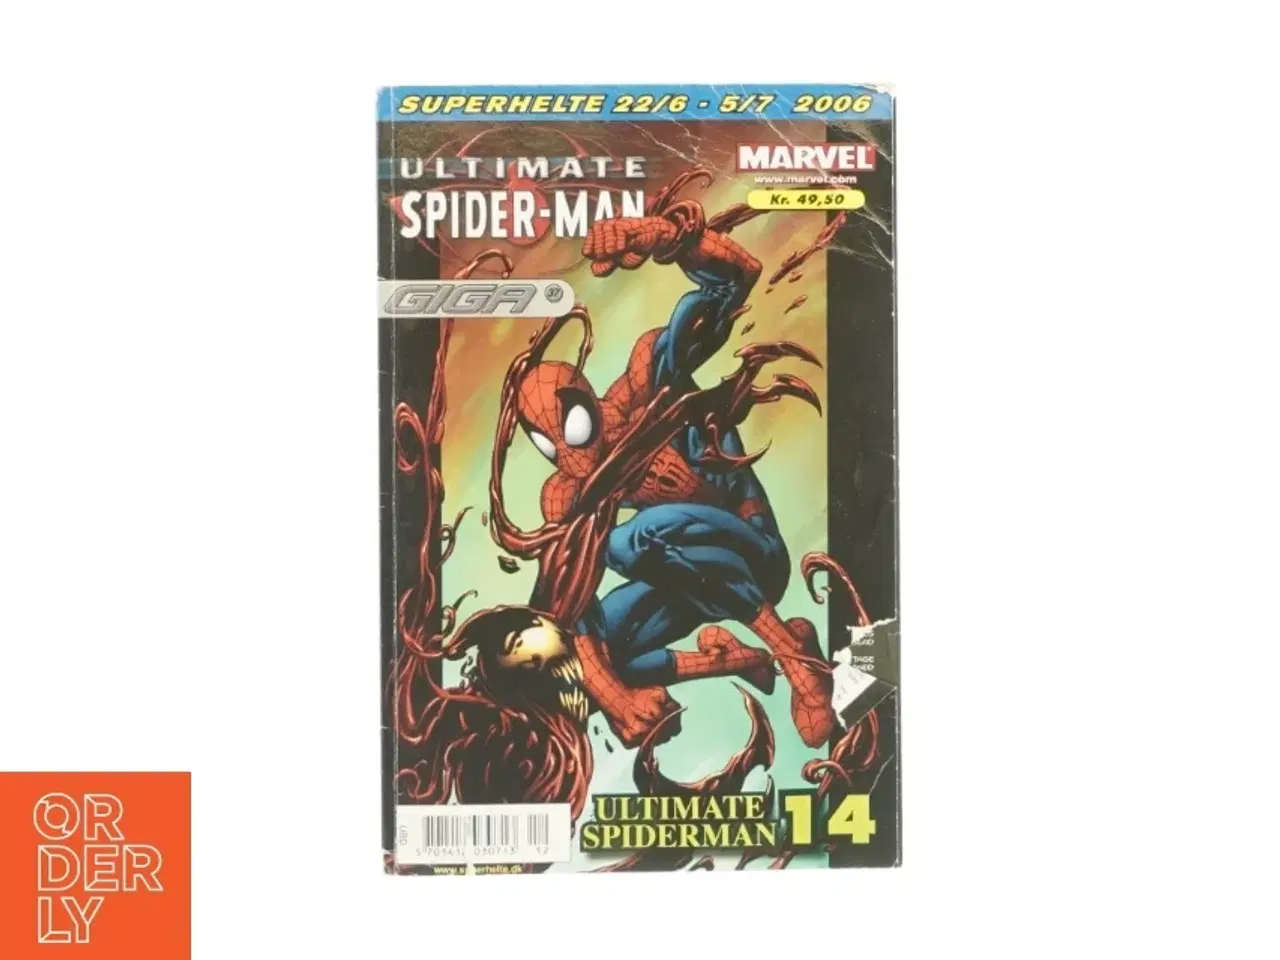 Billede 1 - Spiderman tegneserie